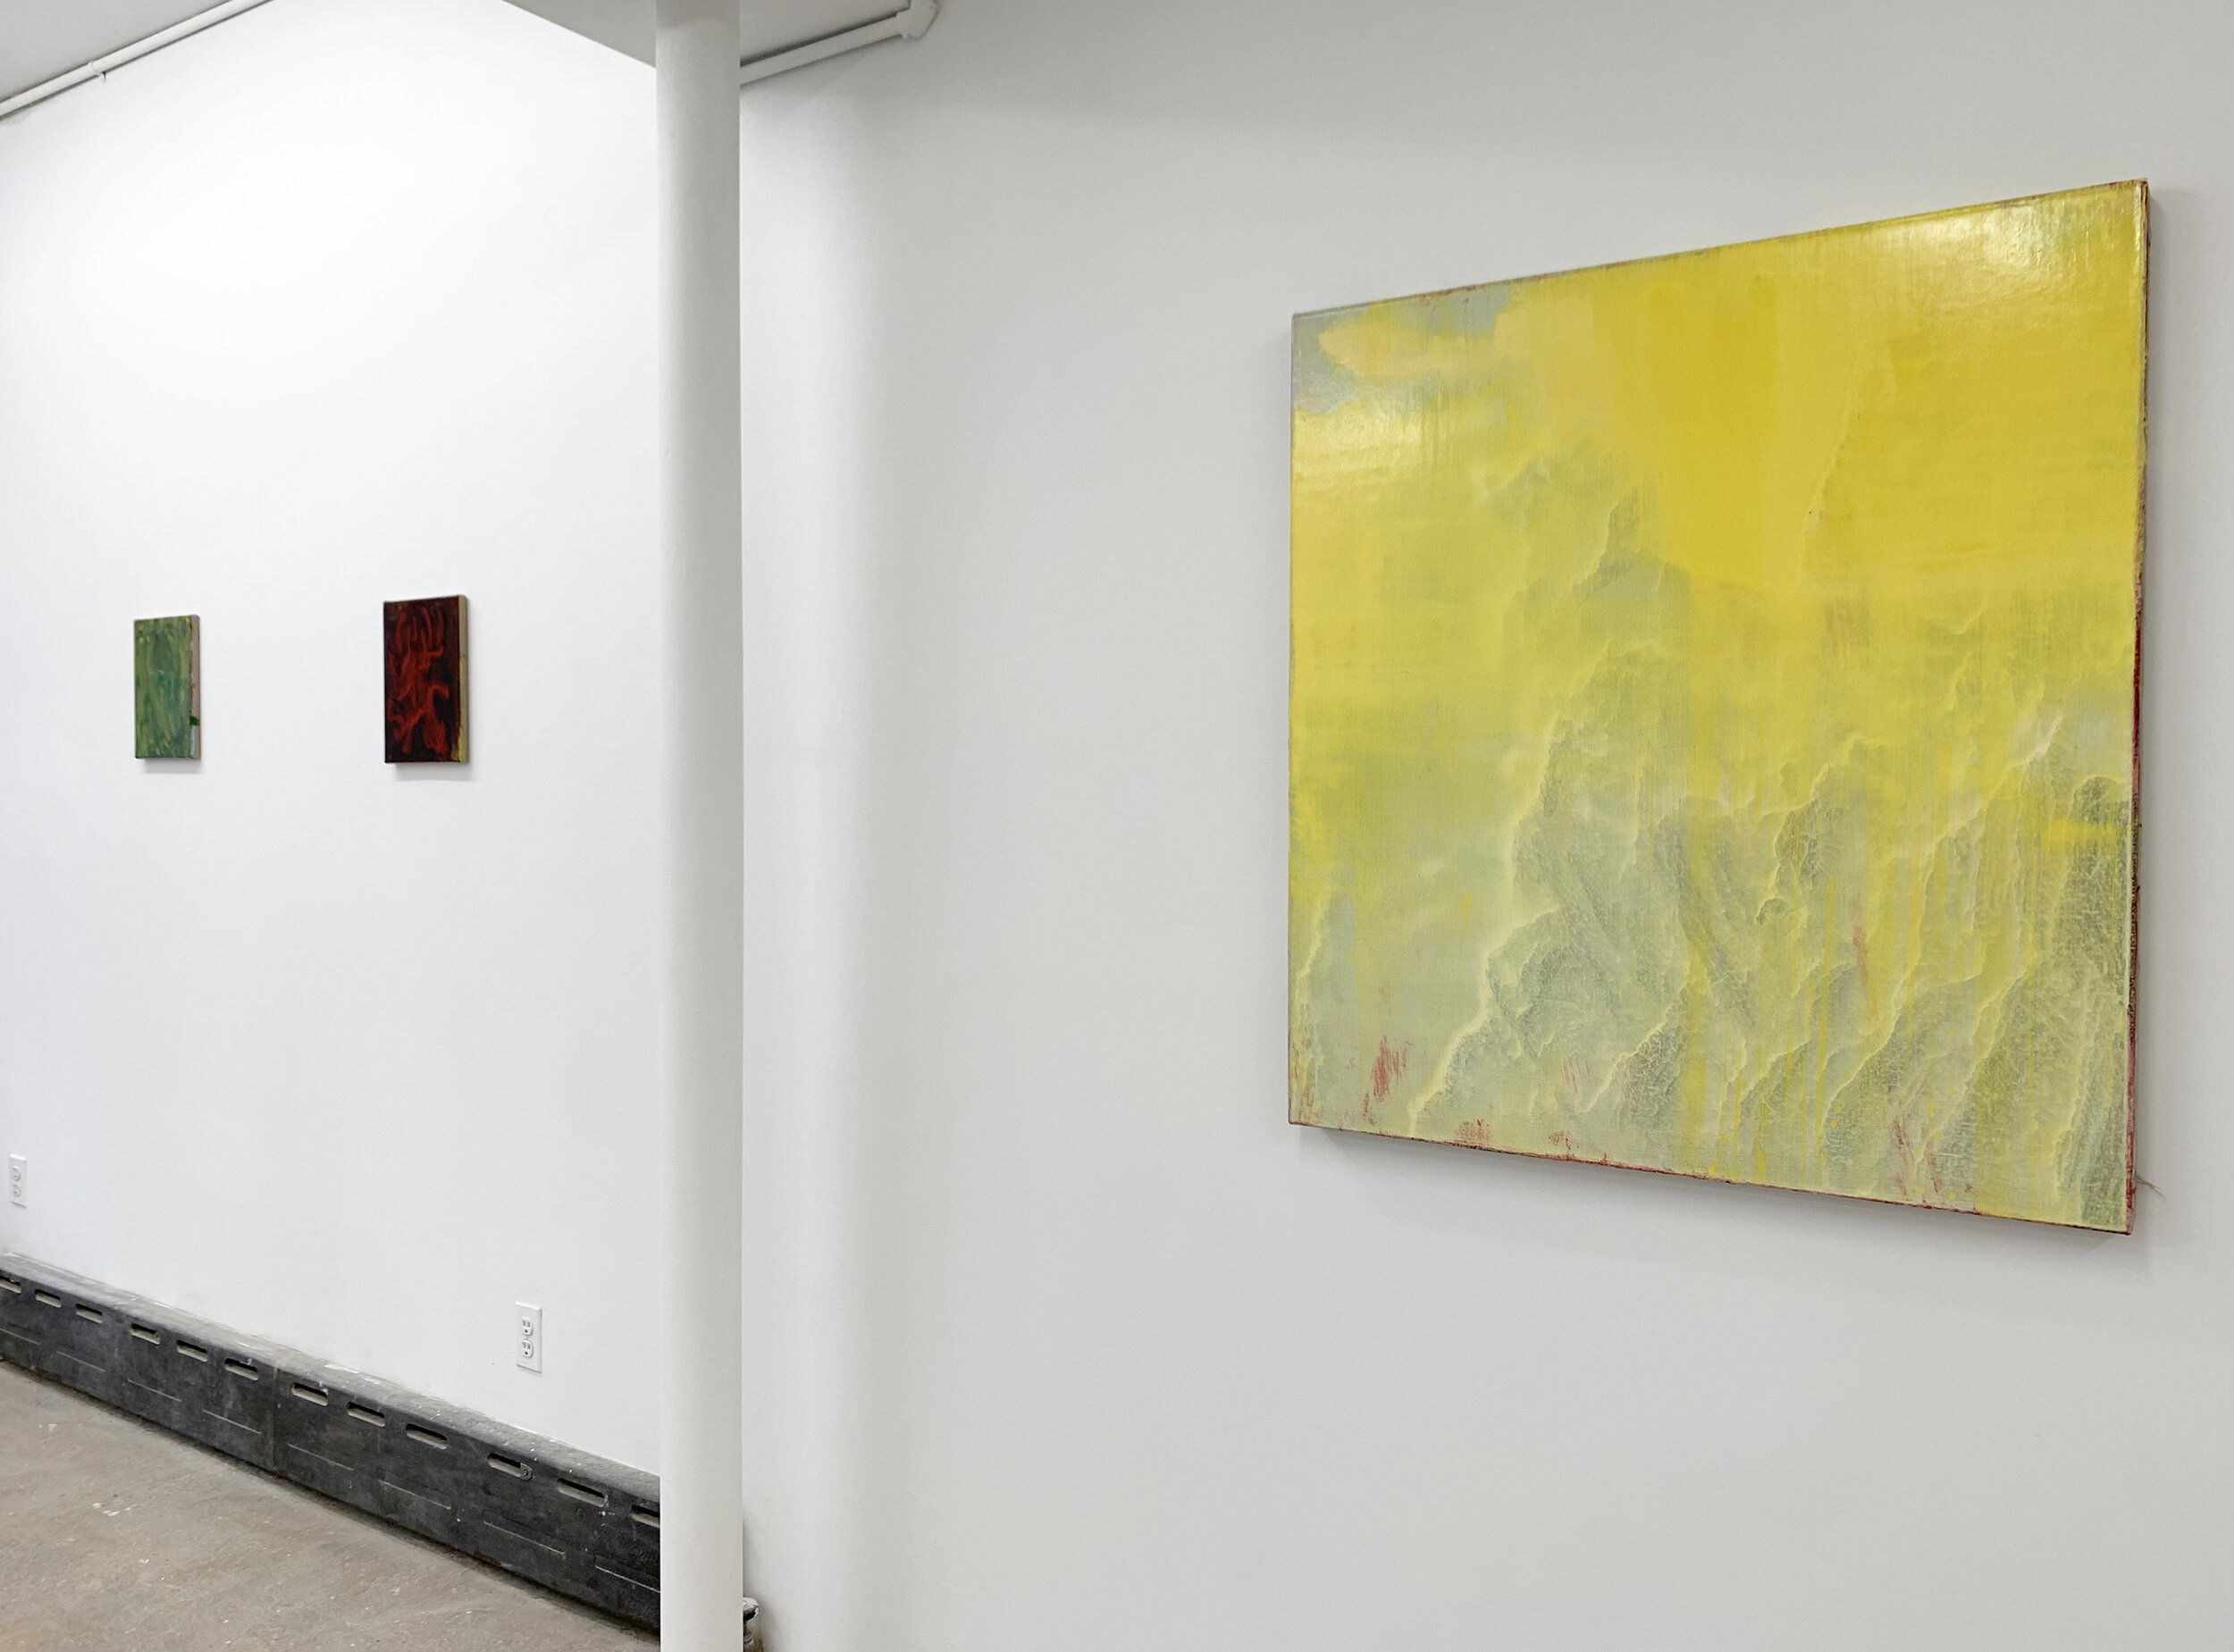 Julius Linnenbrink / Lorna Williams 2019 exhibition at Cindy Rucker Gallery, installation image of Julius Linnenbrink paintings